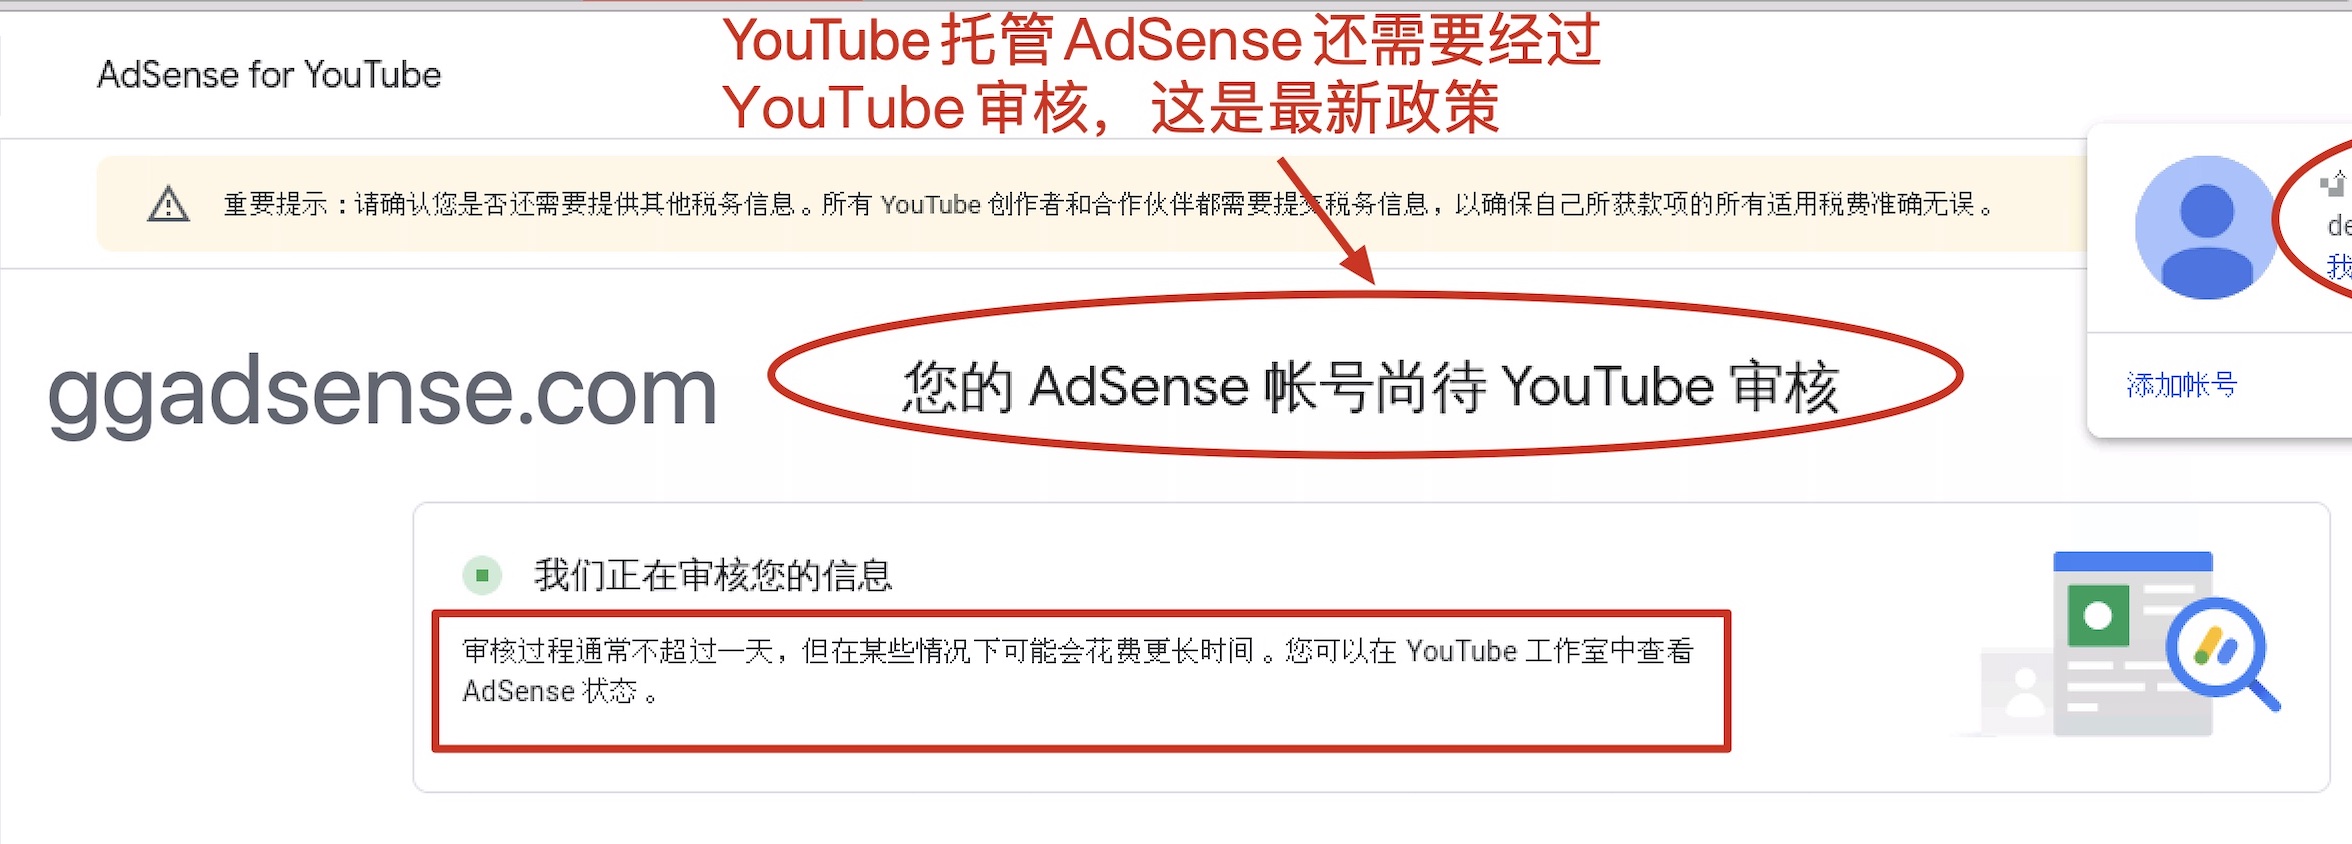 youtube频道获利审核时间，adsense关联油管频道已经7天还在审核中